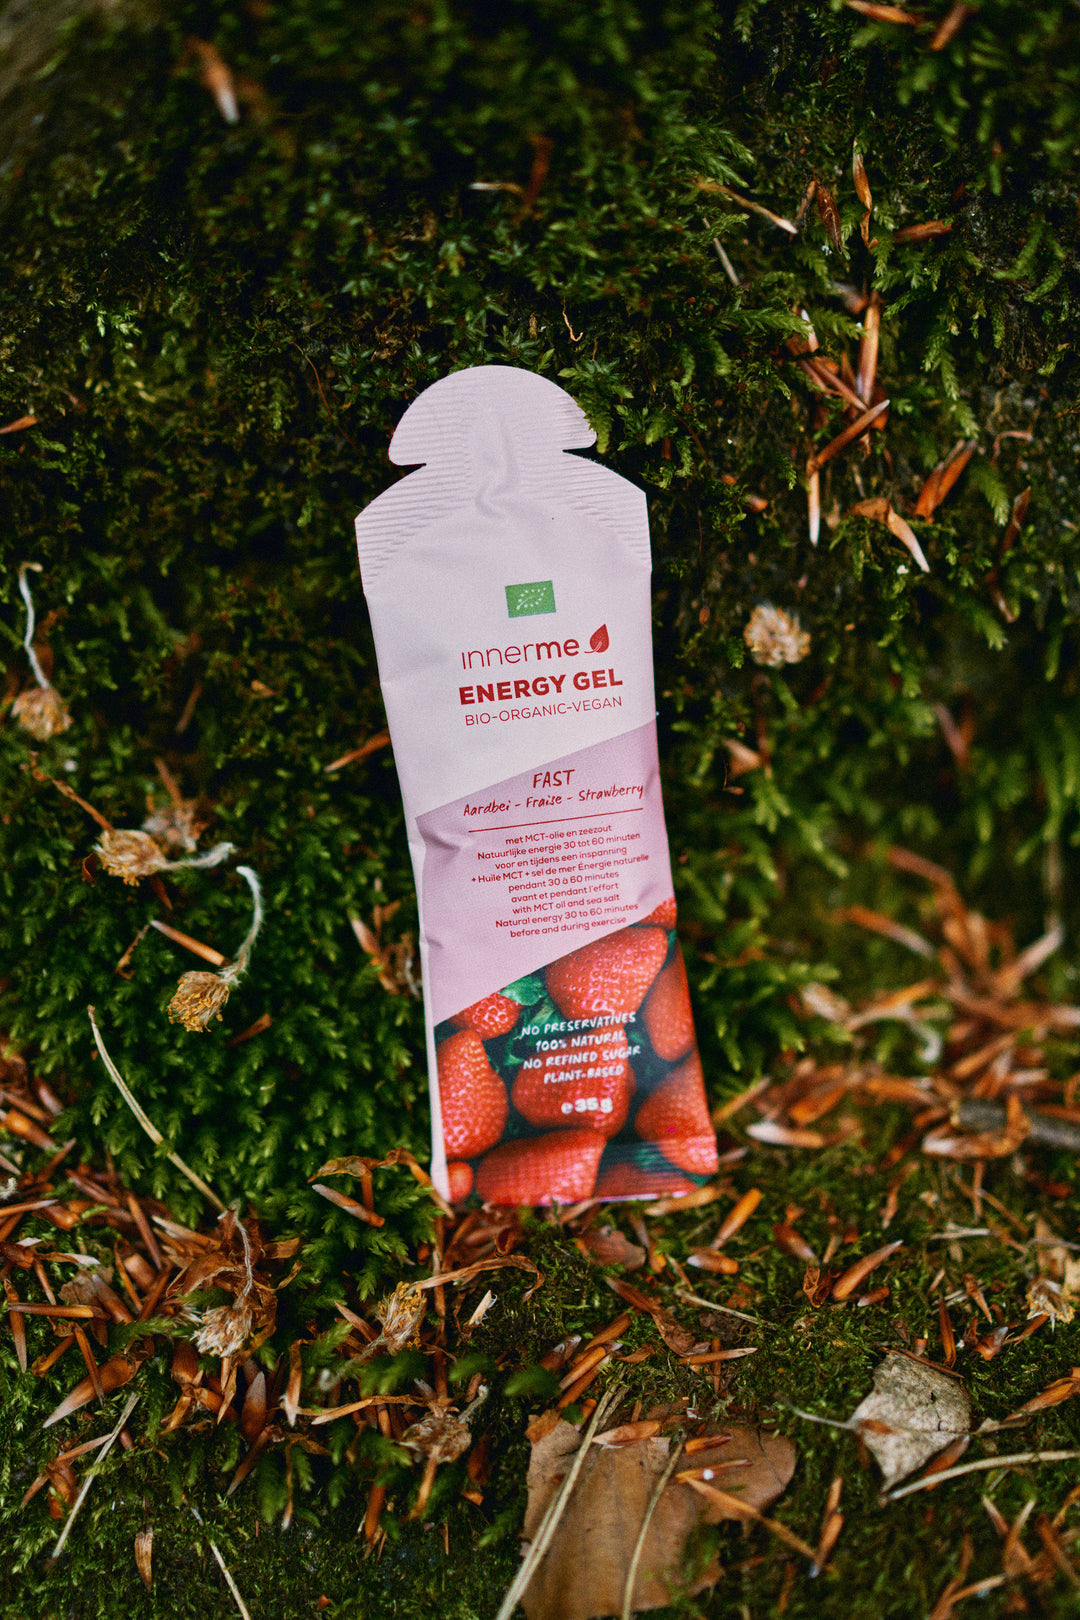 Energy gel ‘Fast’ strawberry (35 g)